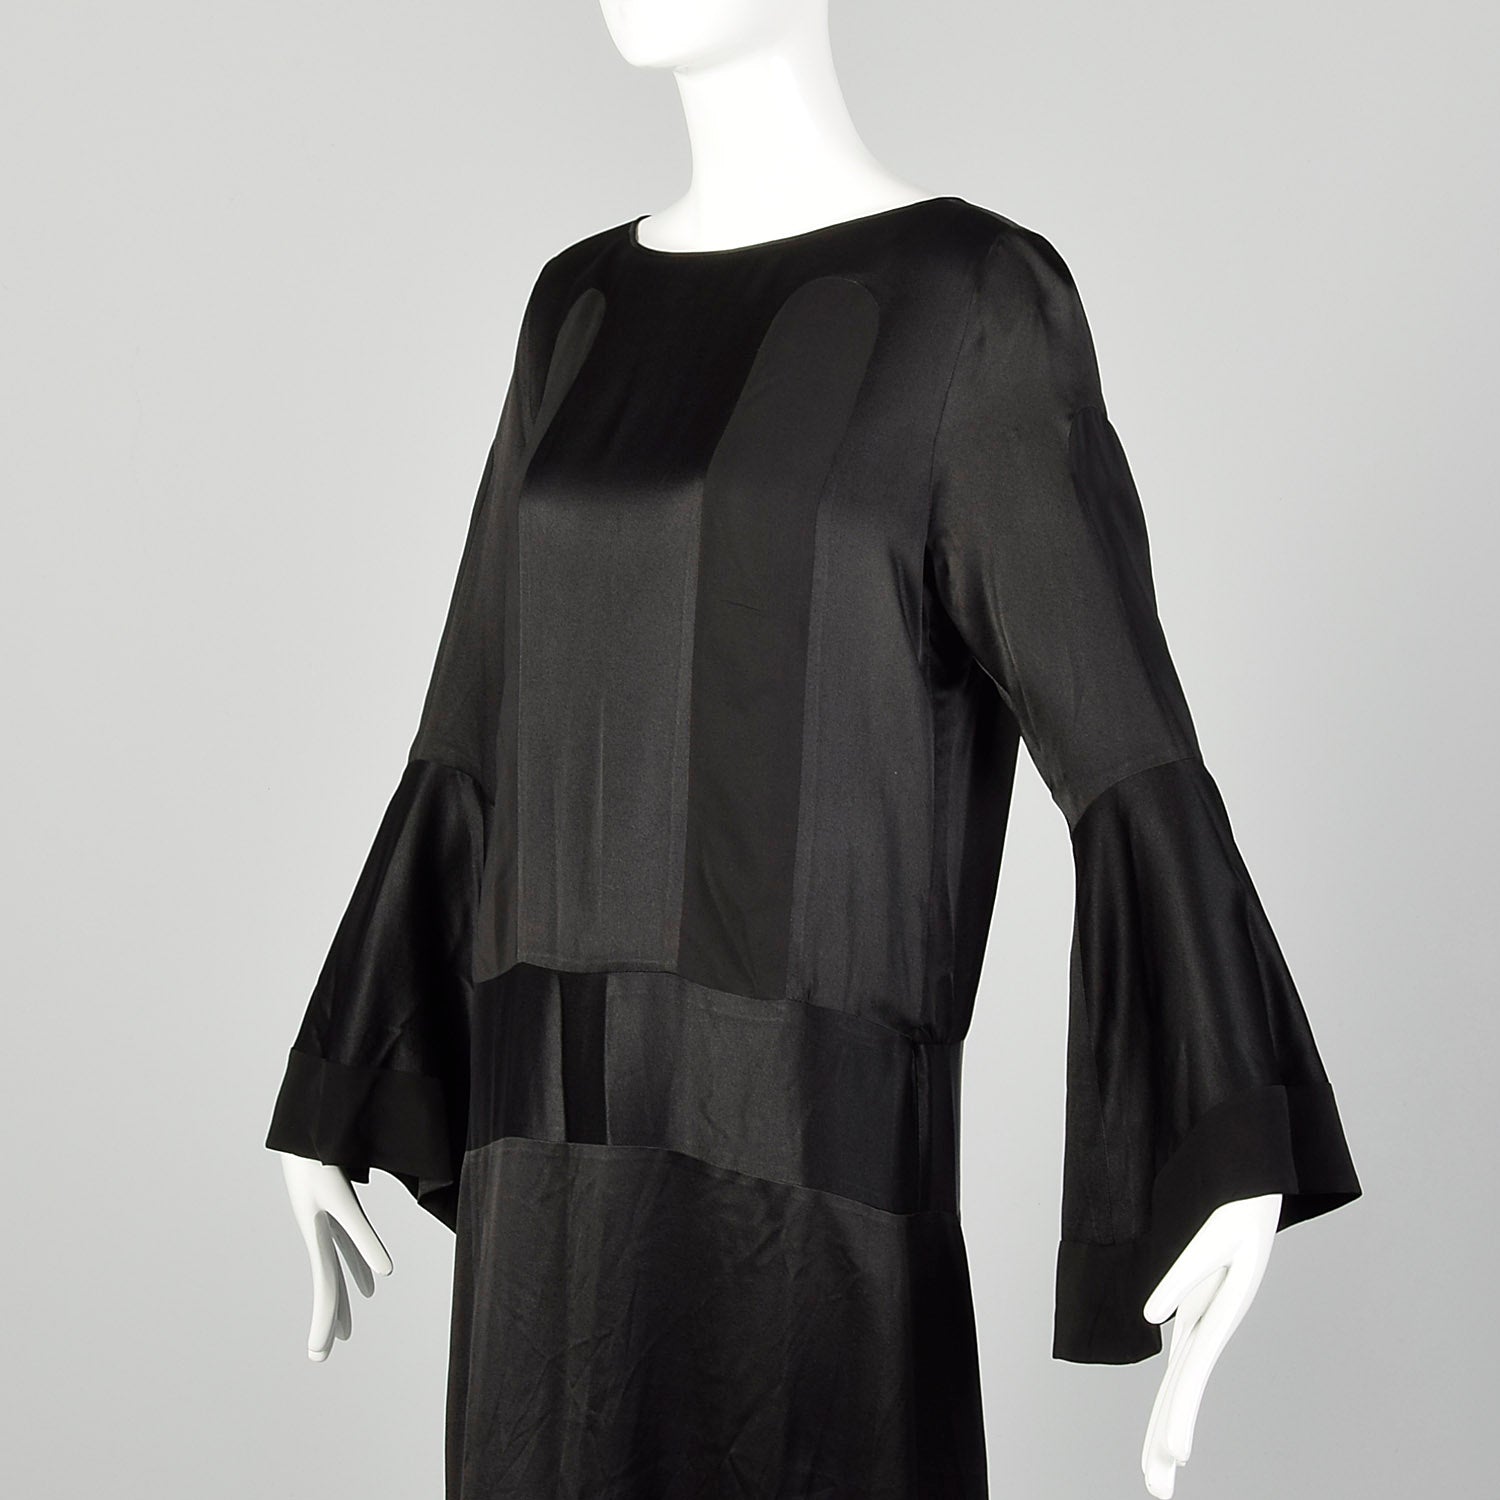 Large 1920s Silk Dress Black on Black Art Deco Trumpet Bell Sleeve Evening Gown